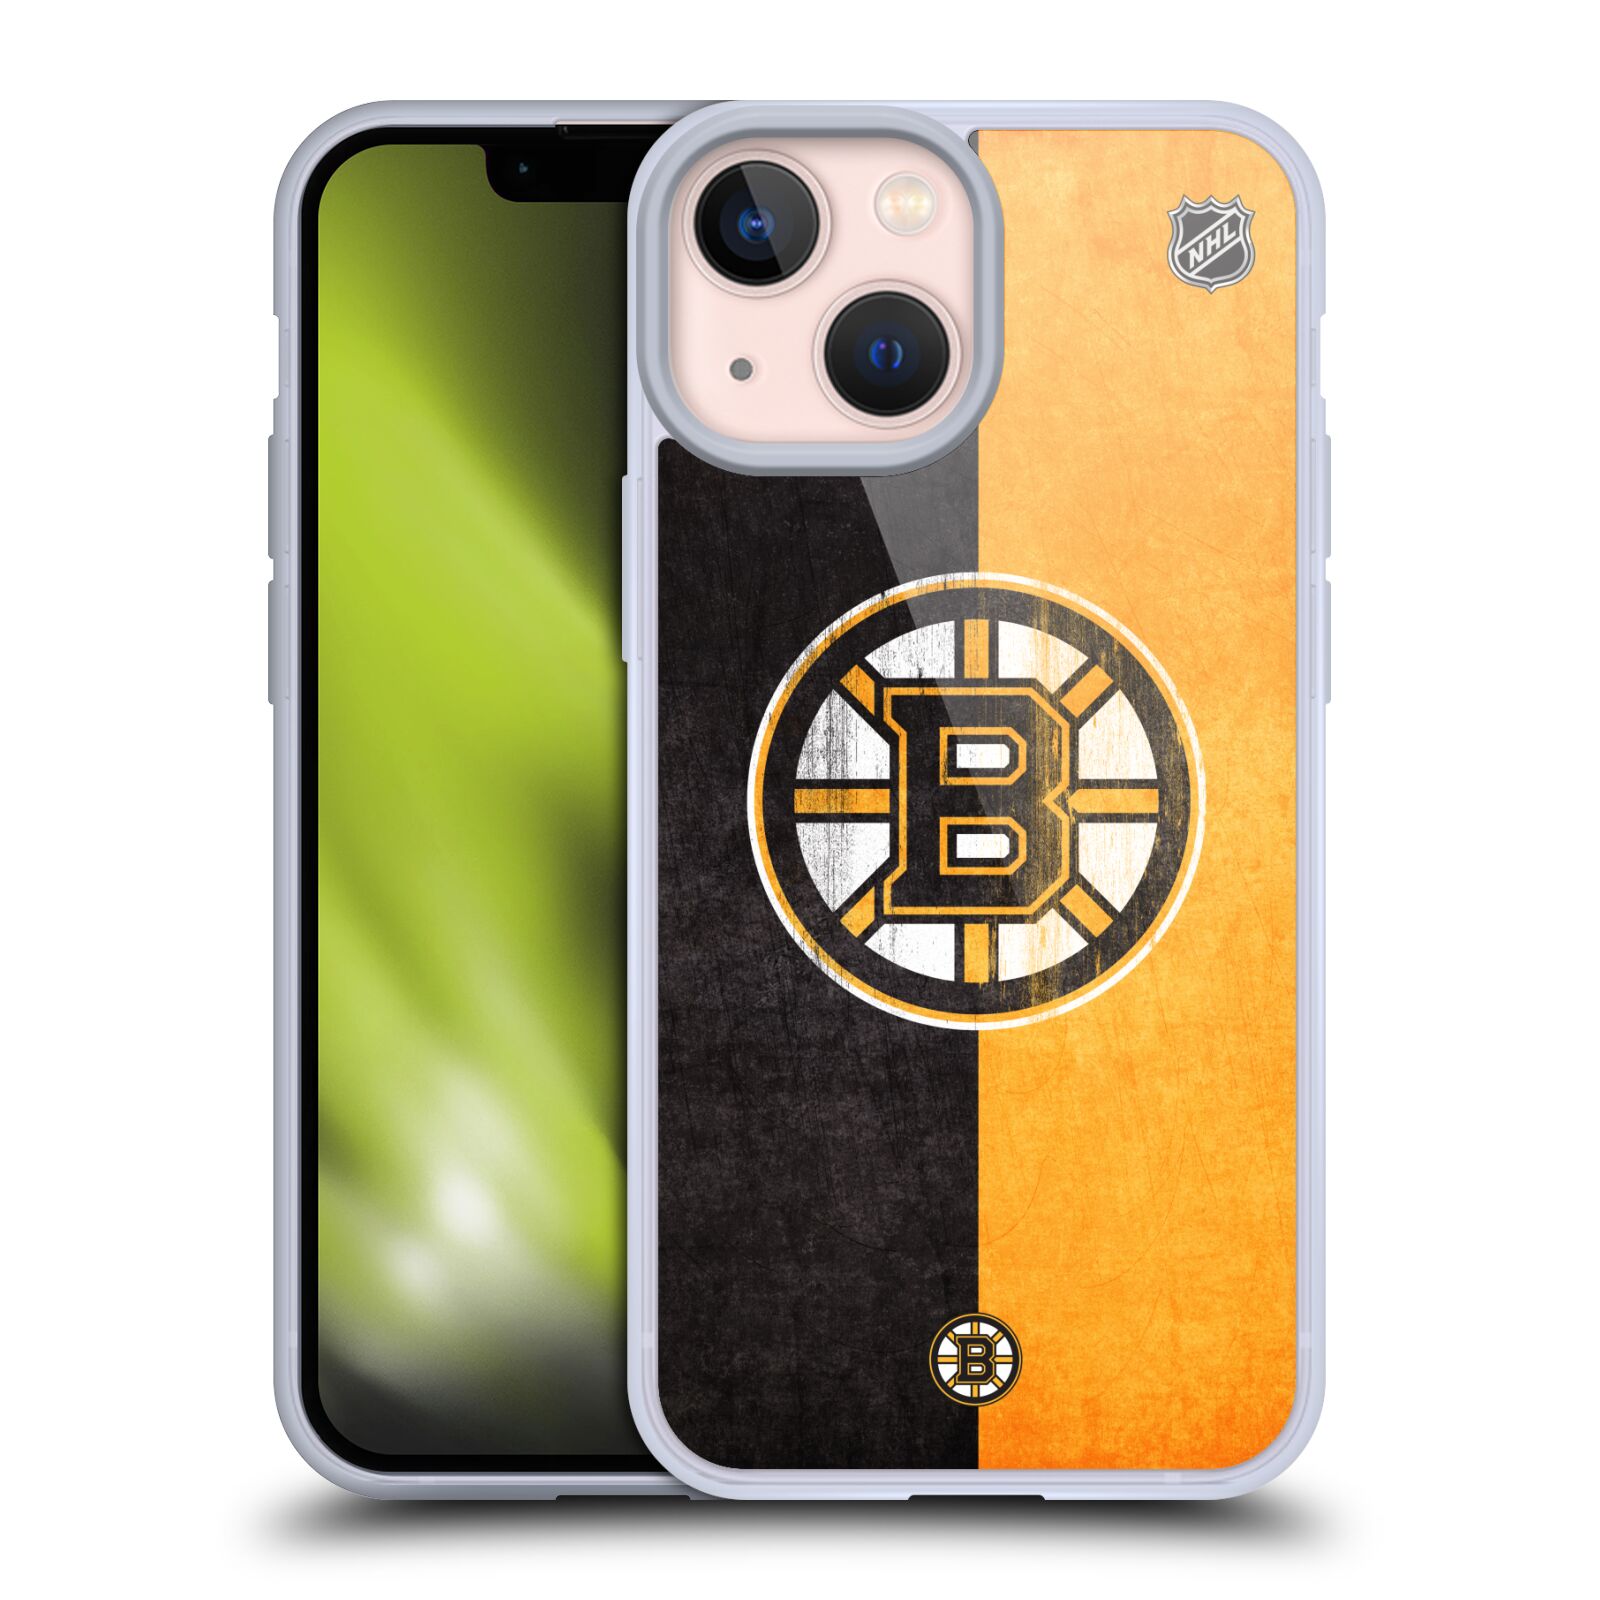 Silikonové pouzdro na mobil Apple iPhone 13 Mini - NHL - Půlené logo Boston Bruins (Silikonový kryt, obal, pouzdro na mobilní telefon Apple iPhone 13 Mini s licencovaným motivem NHL - Půlené logo Boston Bruins)